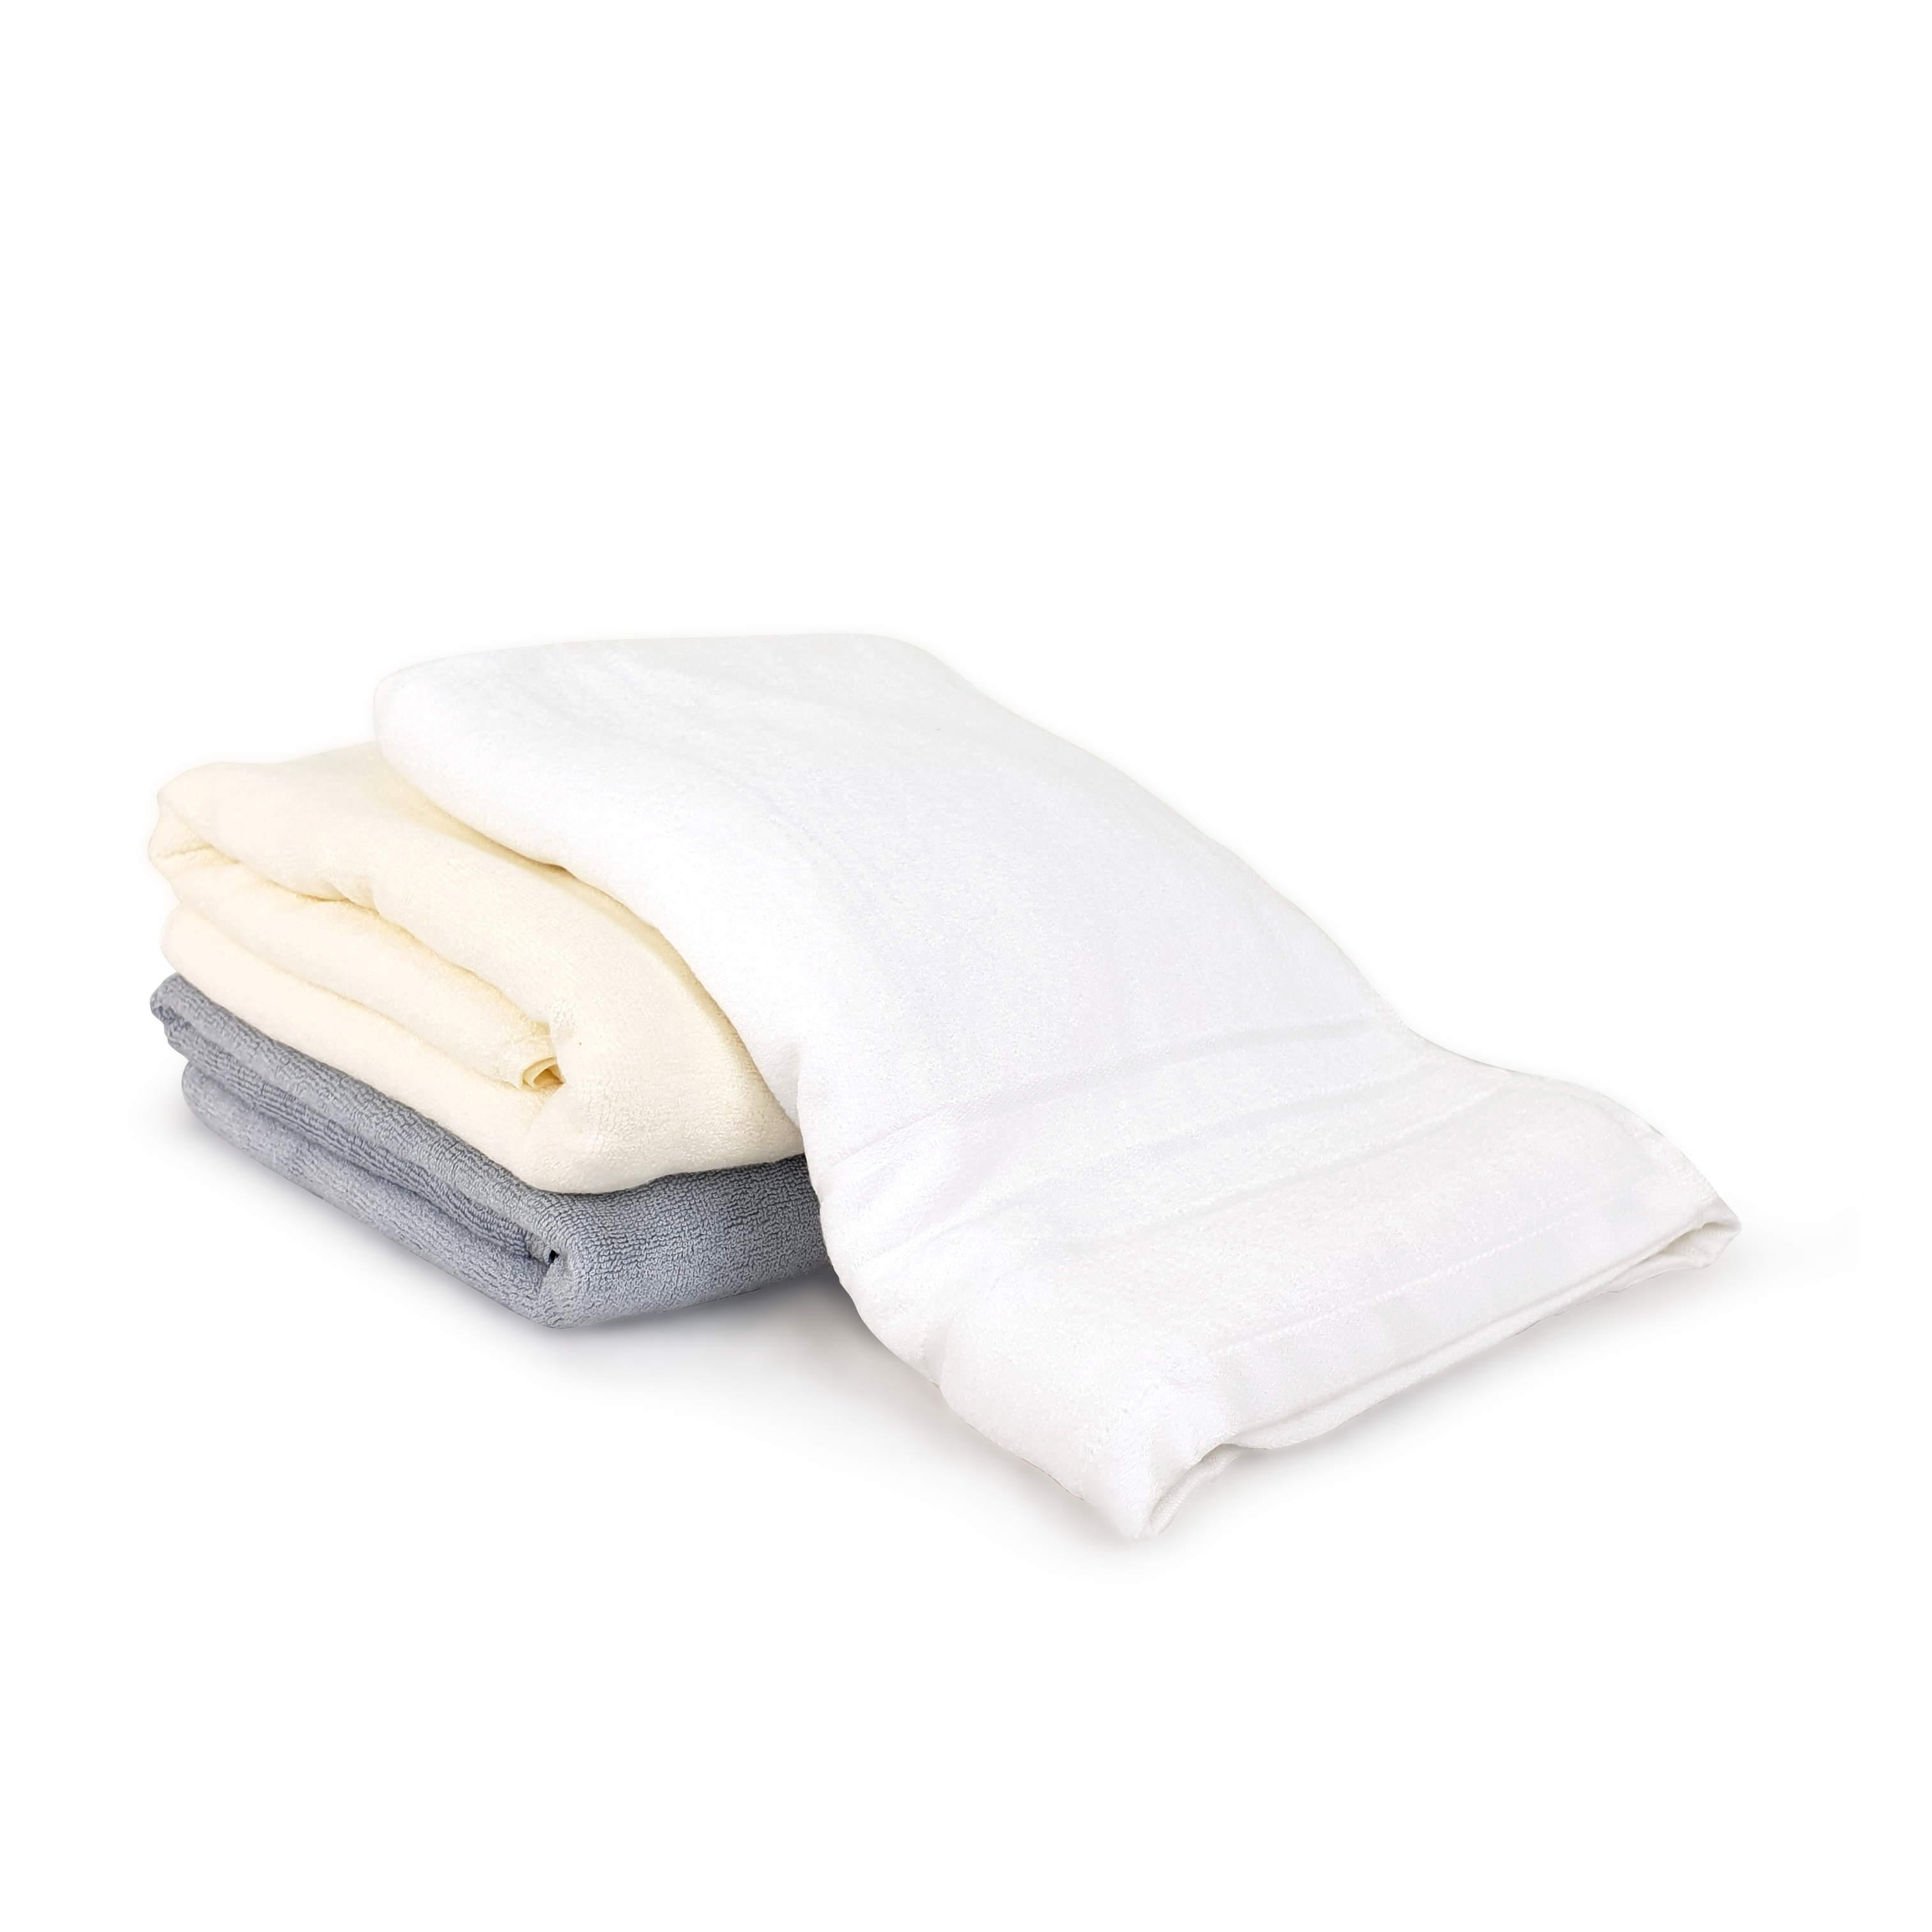 baby-fair Simply Life Premium Bamboo Towel Plush 70cm x 140cm Adult